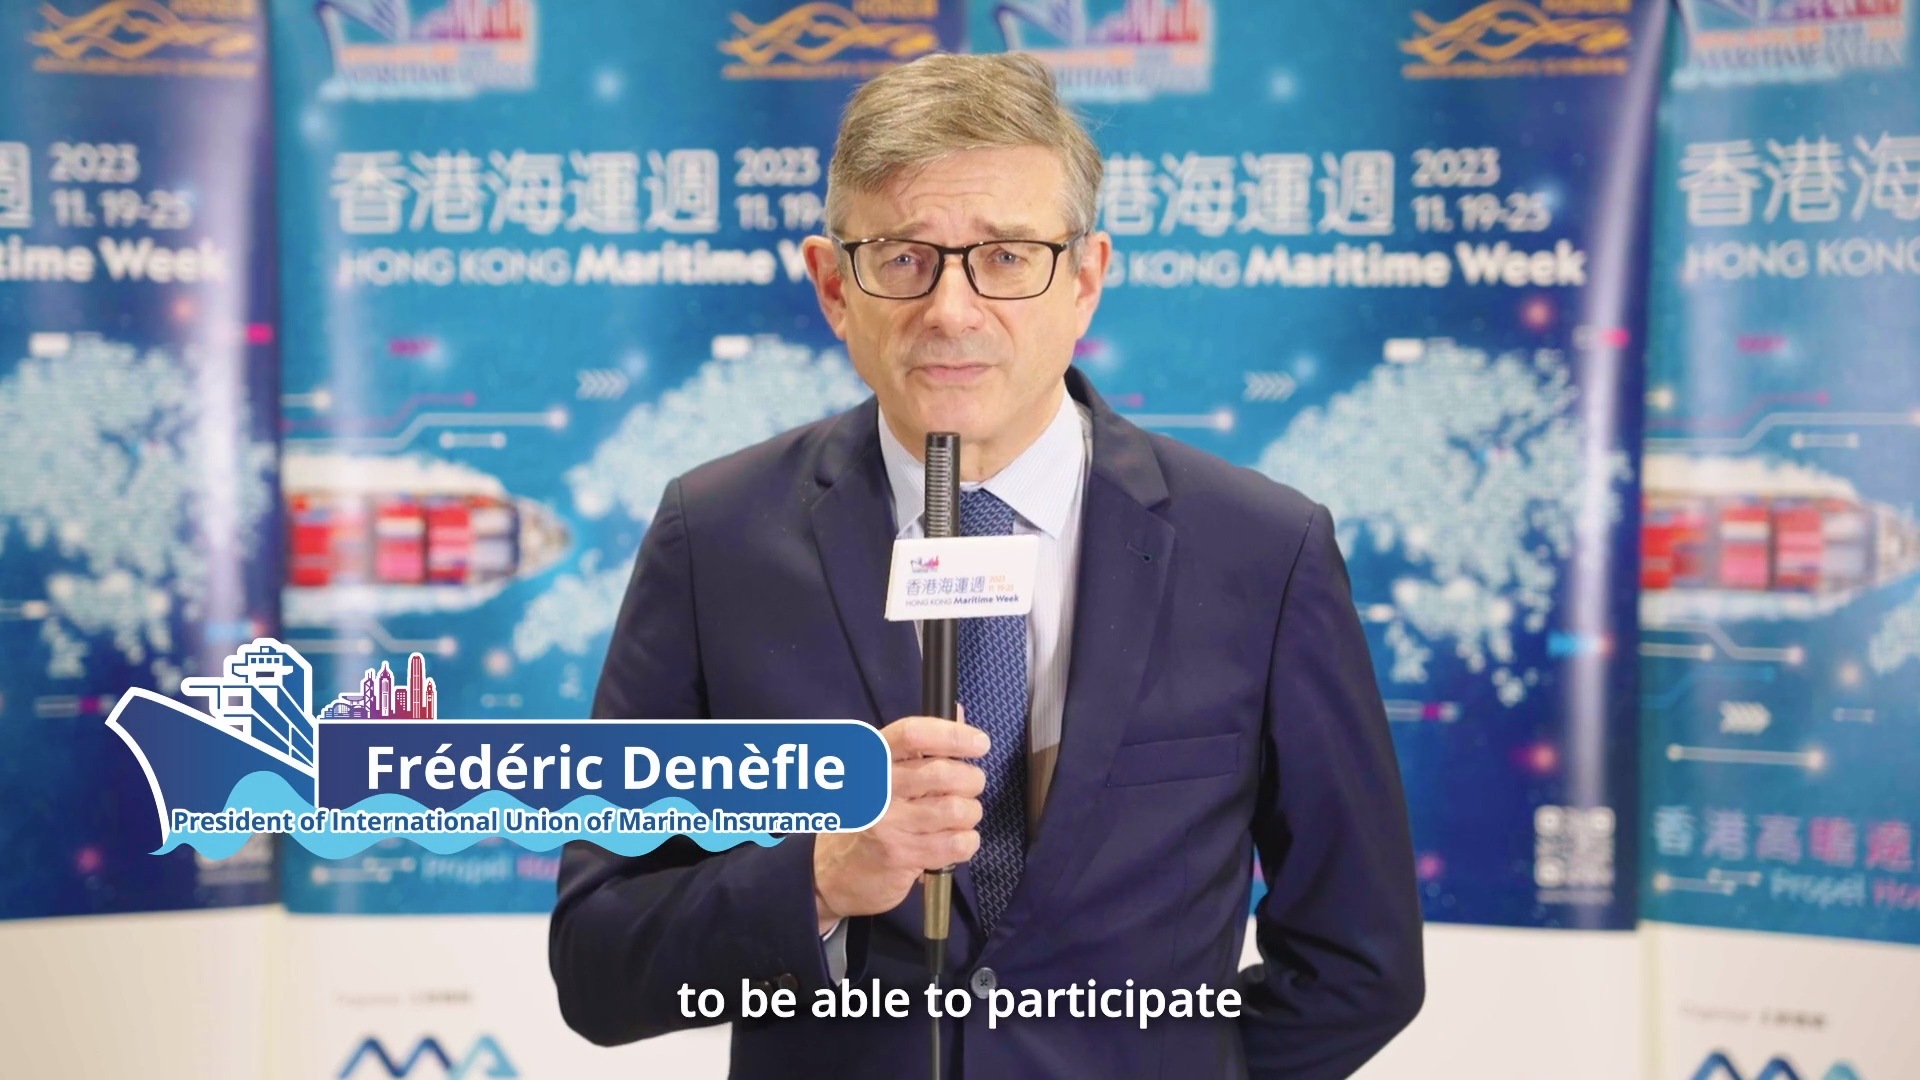 Hong Kong Maritime Week 2023 - Highlights from Mr Frédéric Denèfle, President of International Union of Marine Insurance